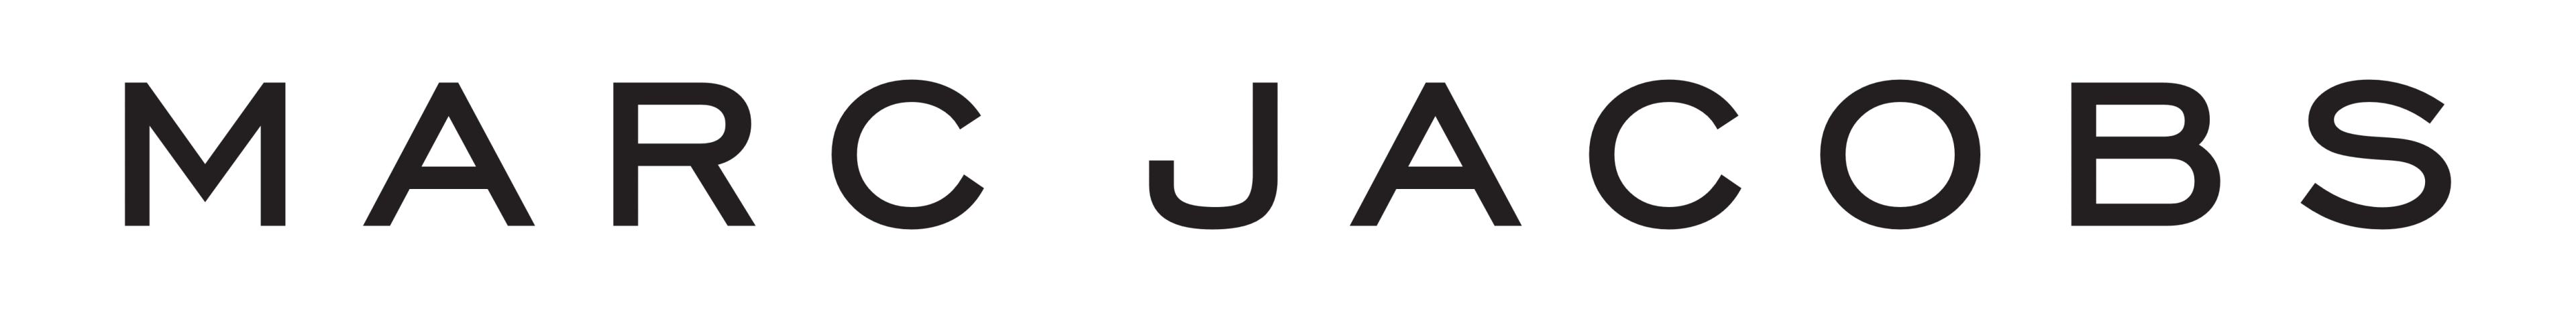 Marc_Jacobs_logo